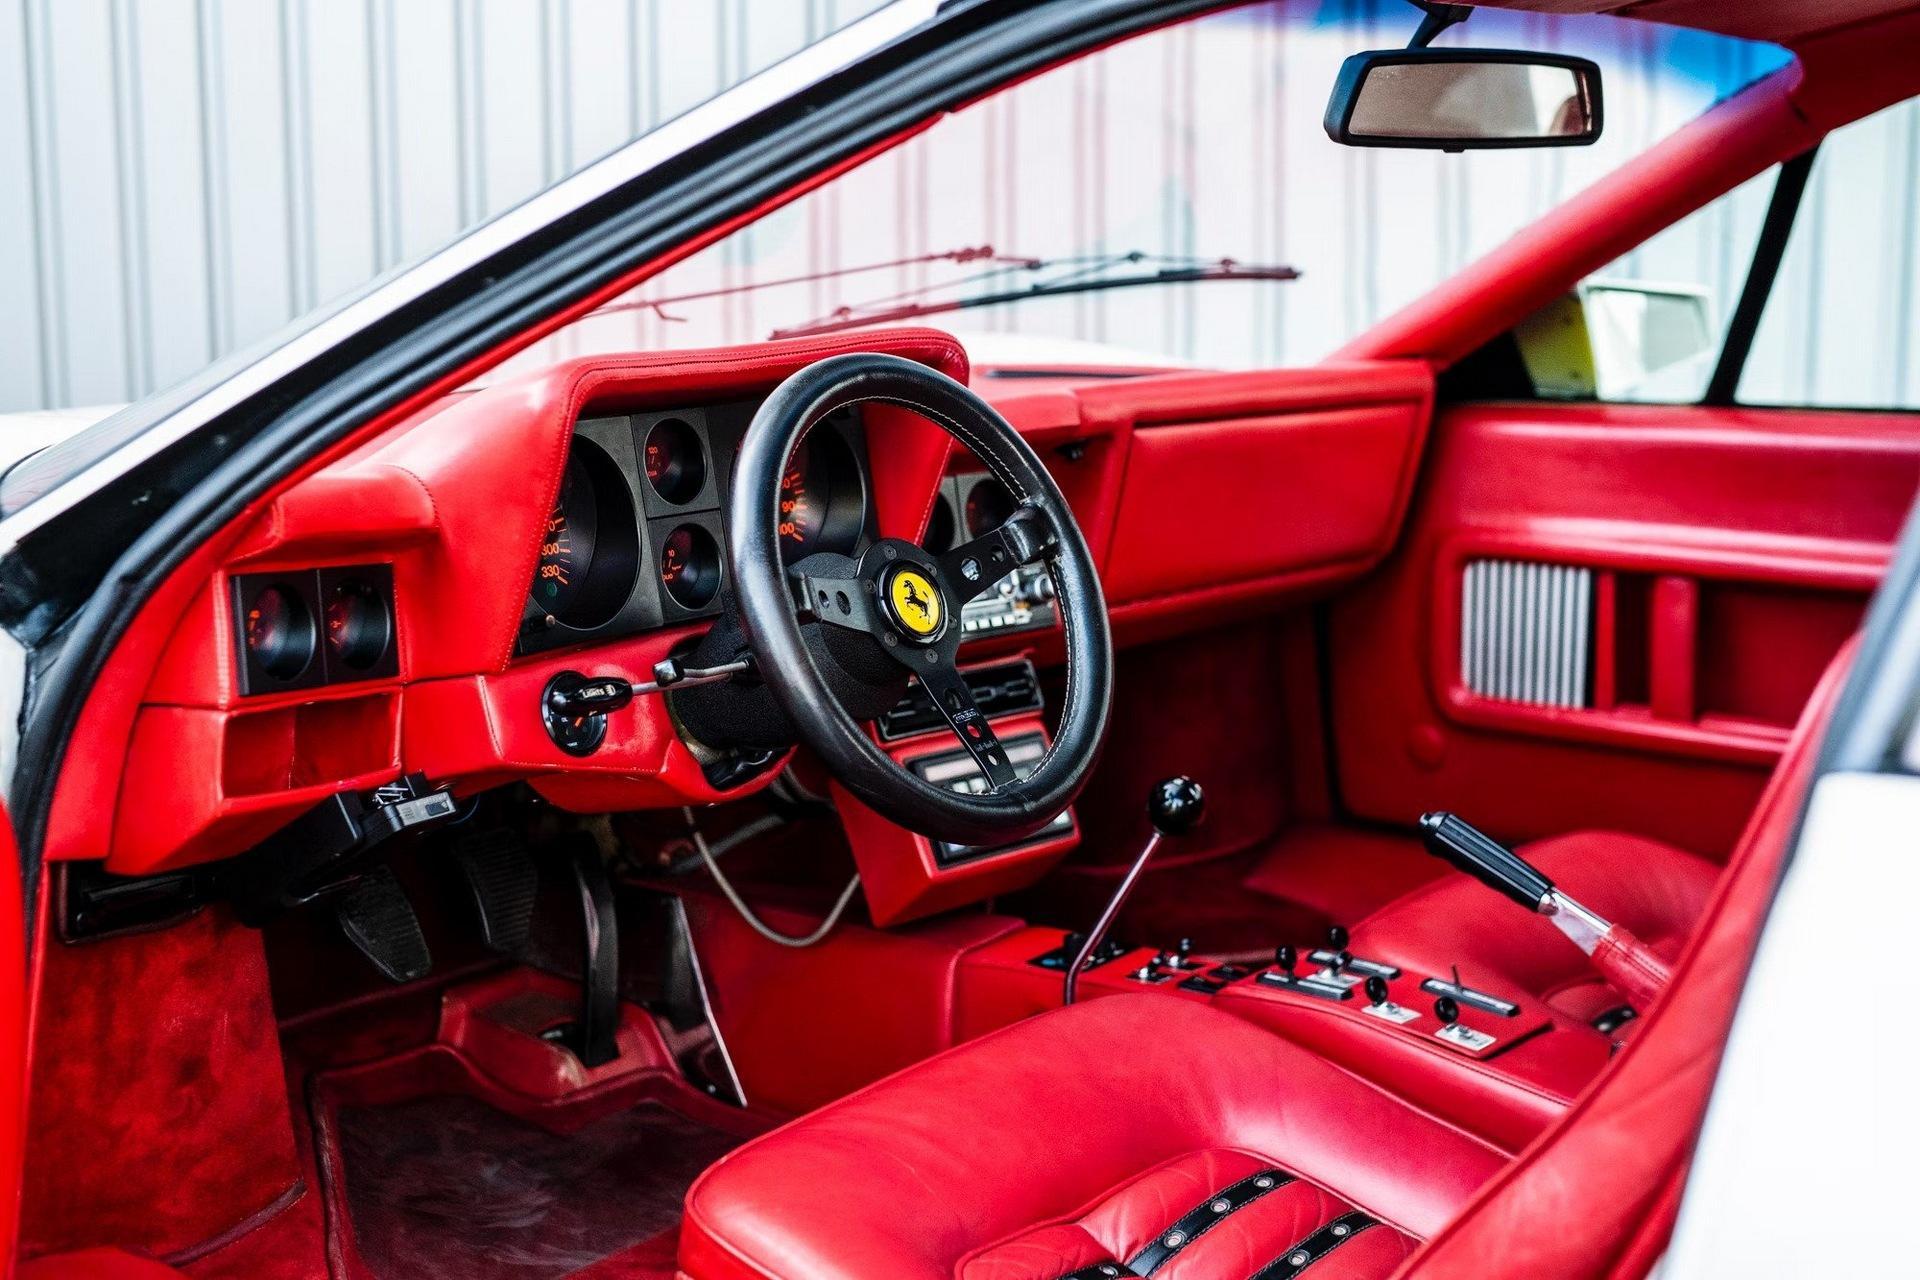 Ferrarijeva unutrašnjost - Avaz